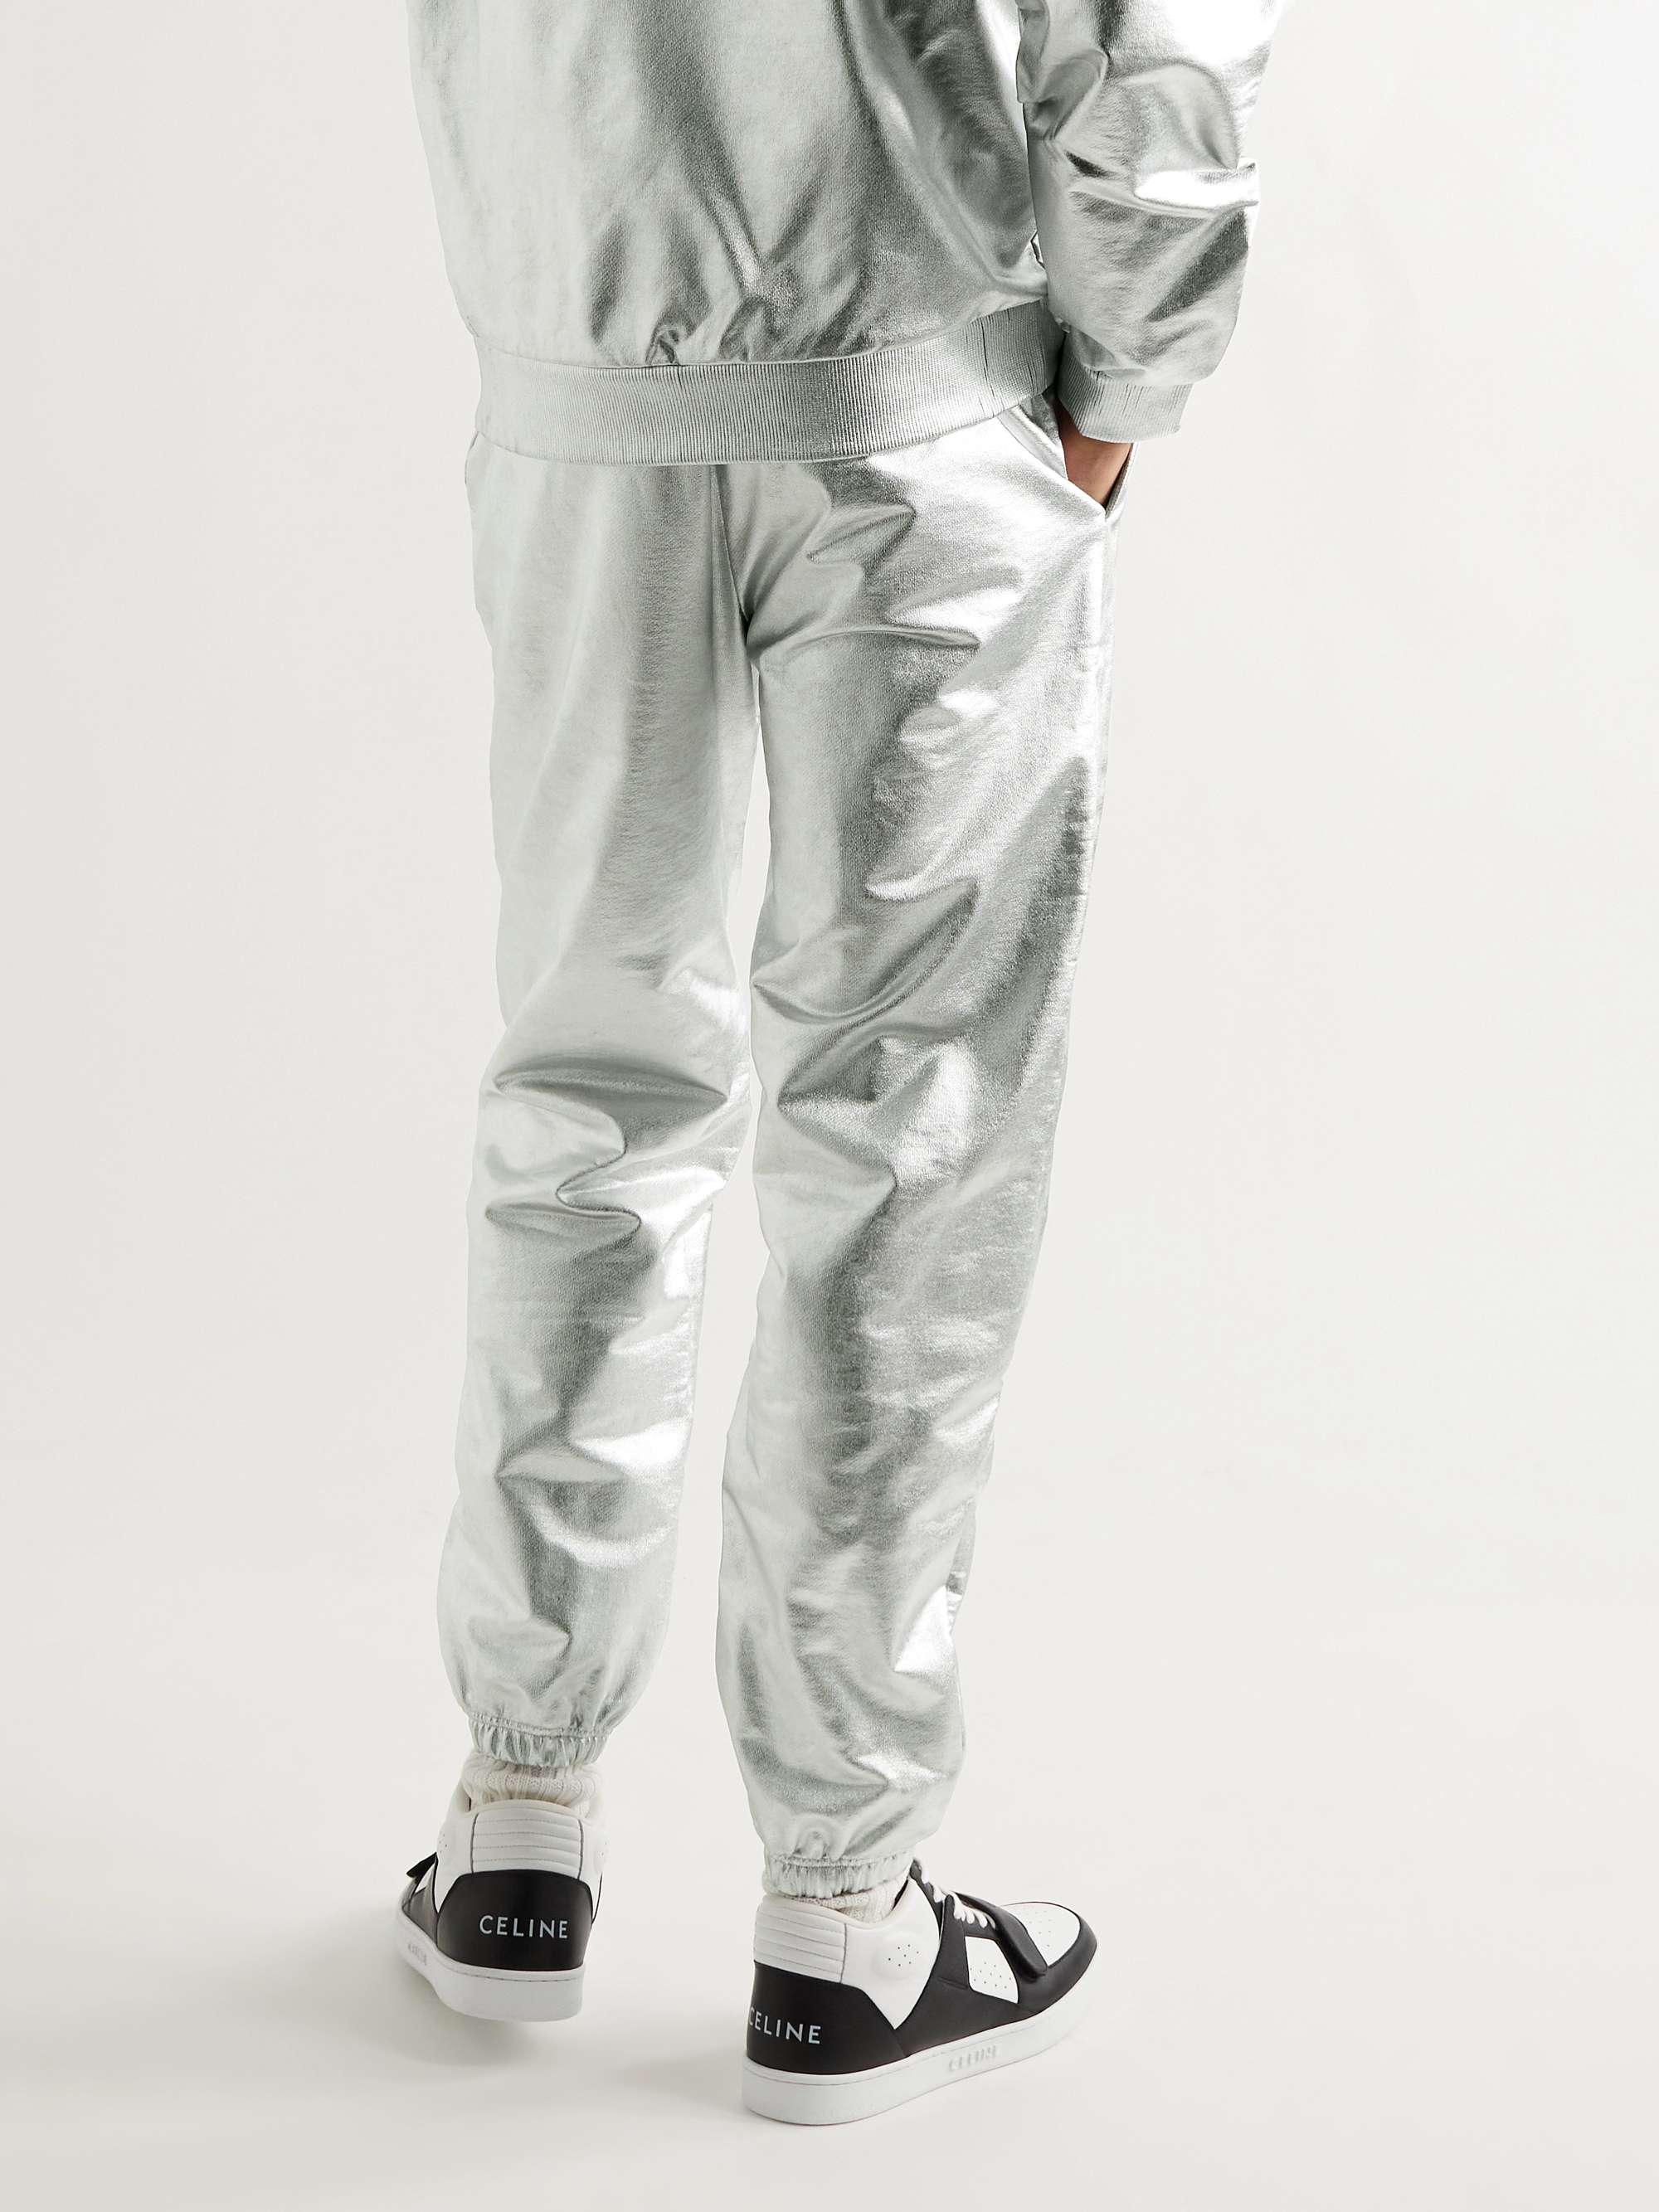 CELINE HOMME Slim-Fit Tapered Metallic Cotton-Jersey Sweatpants